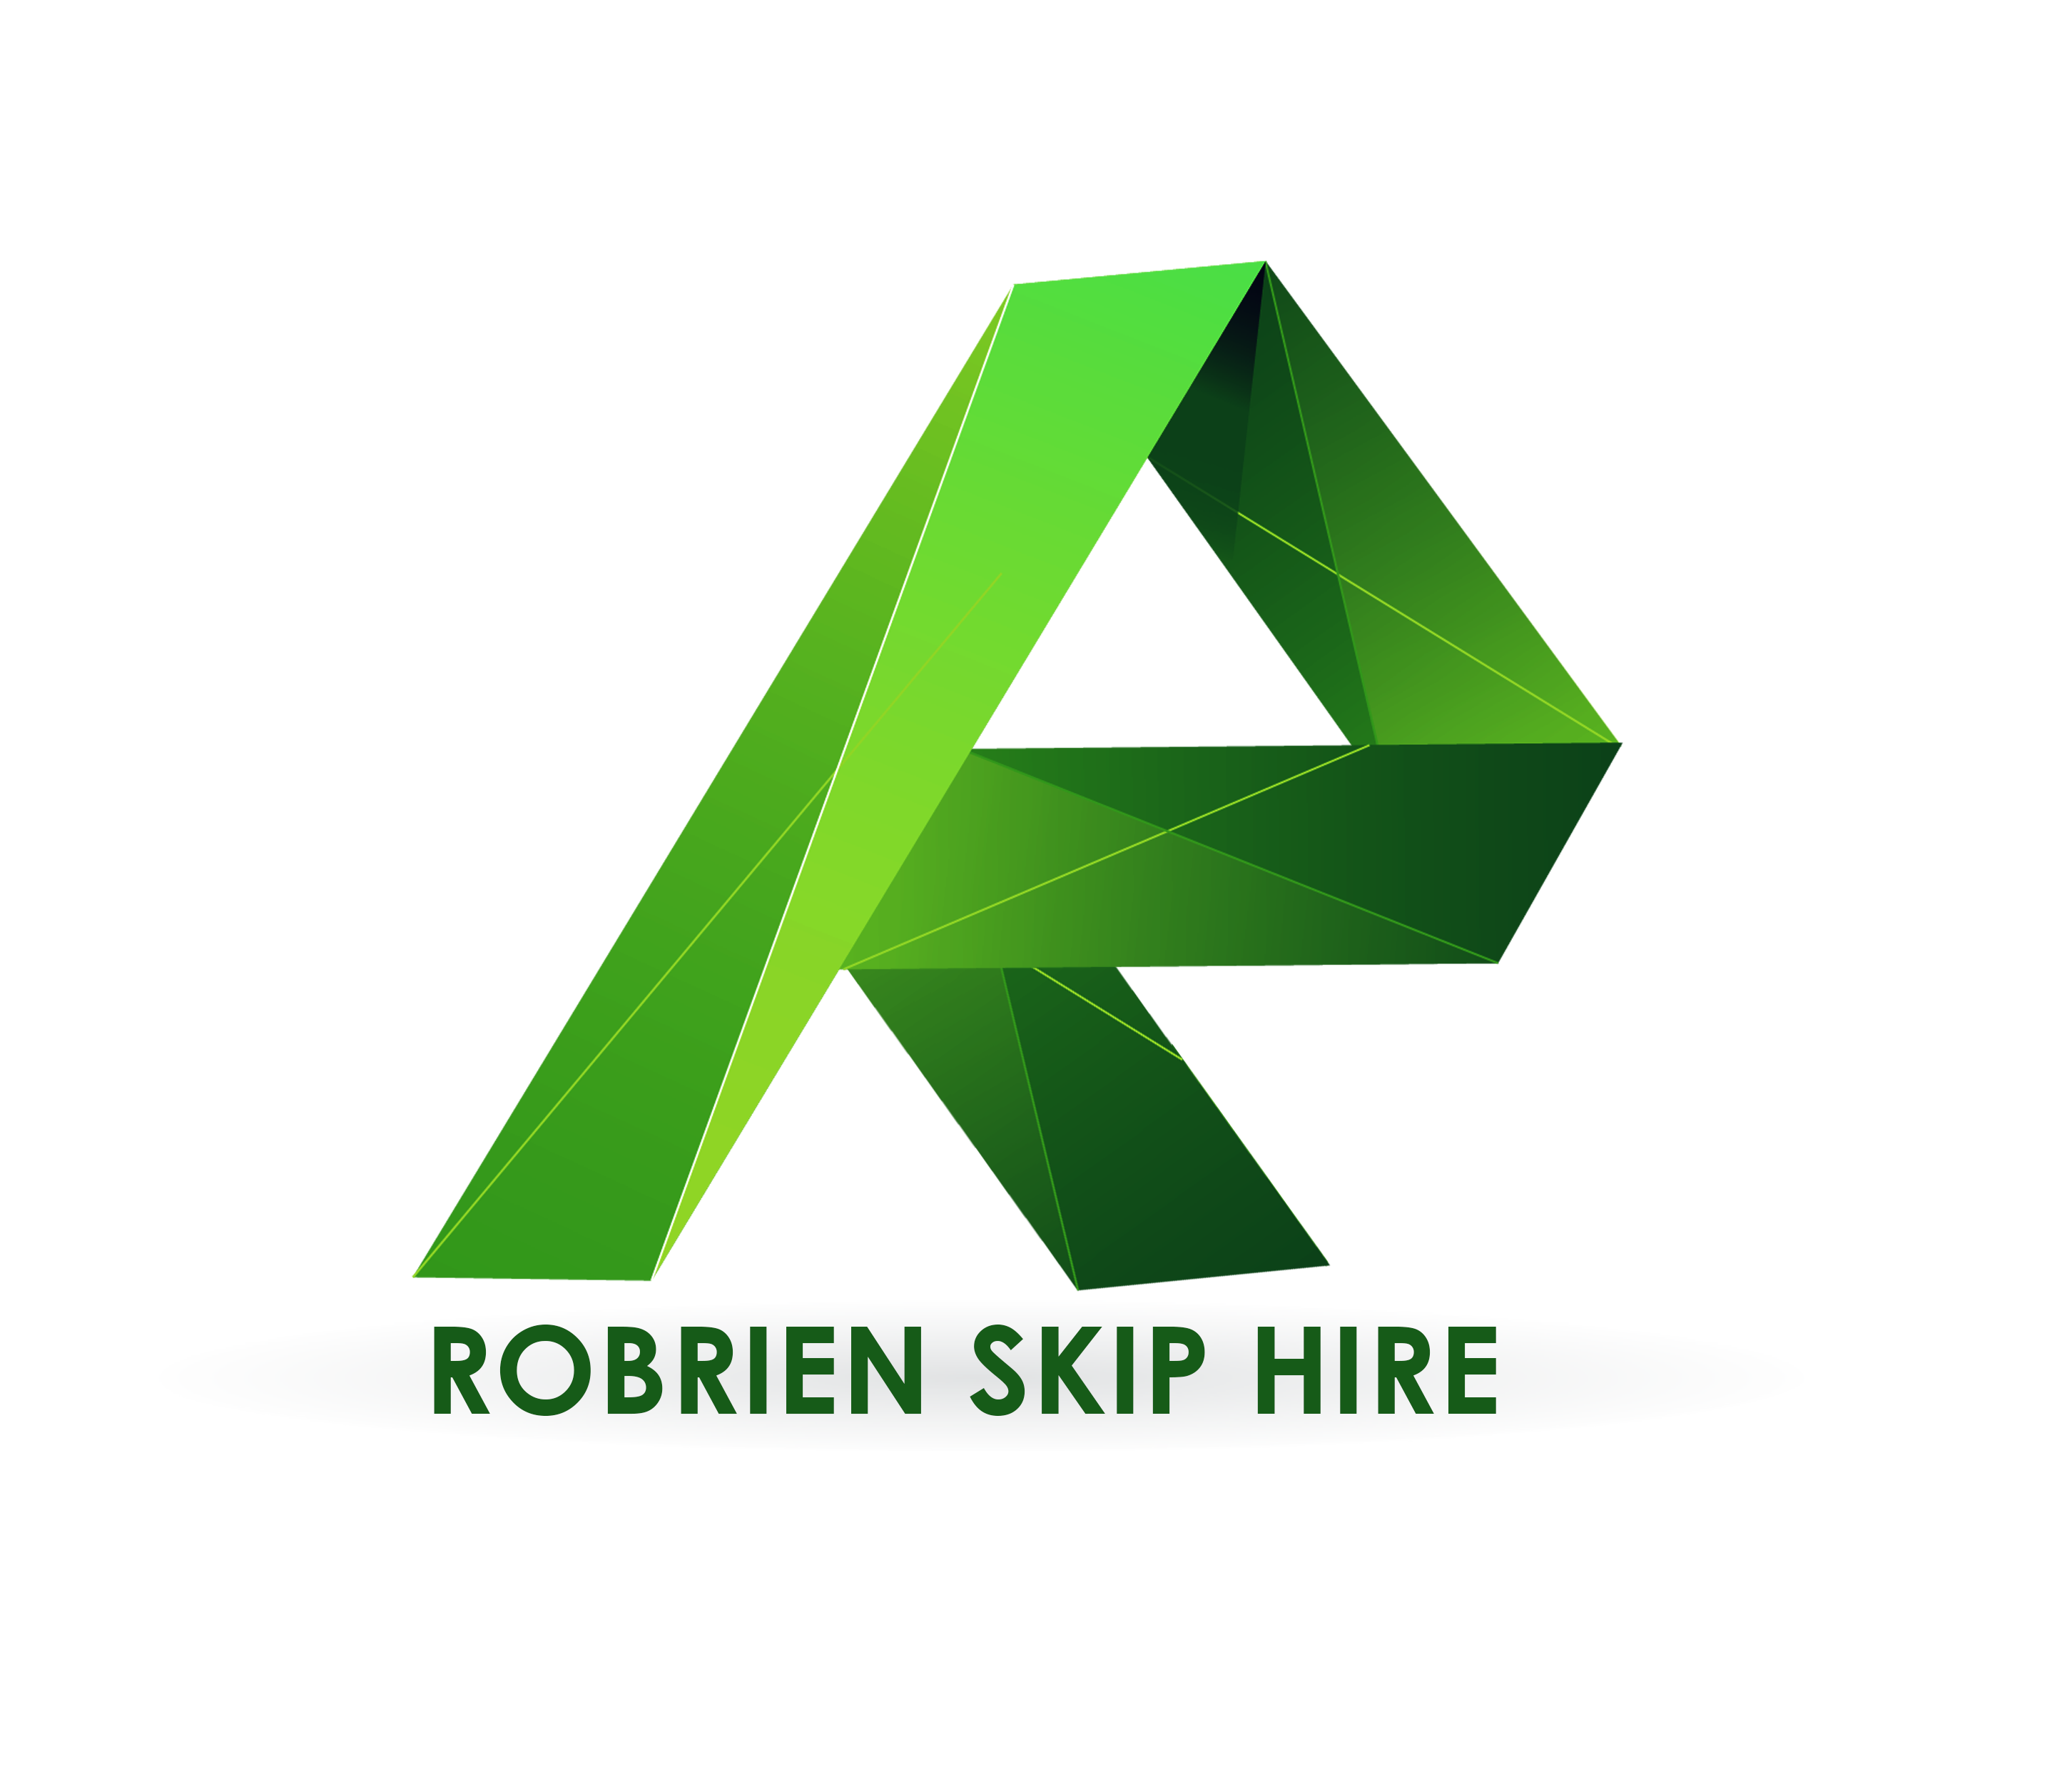 skip hire blackpool logo